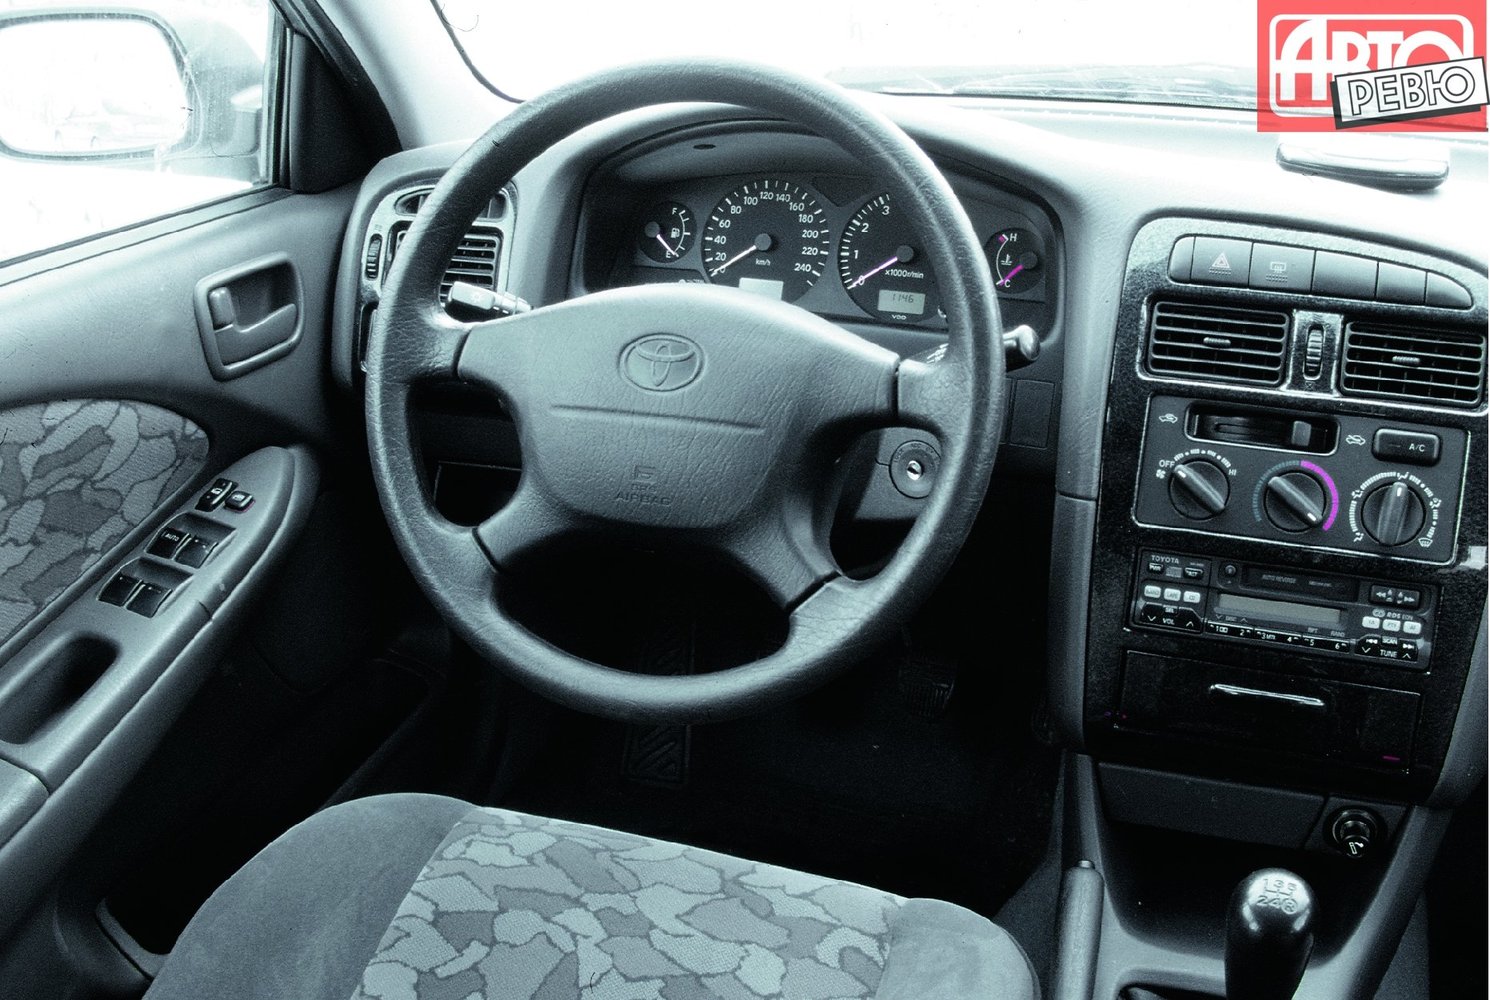 седан Toyota Avensis 1997 - 2000г выпуска модификация 1.6 MT (101 л.с.)